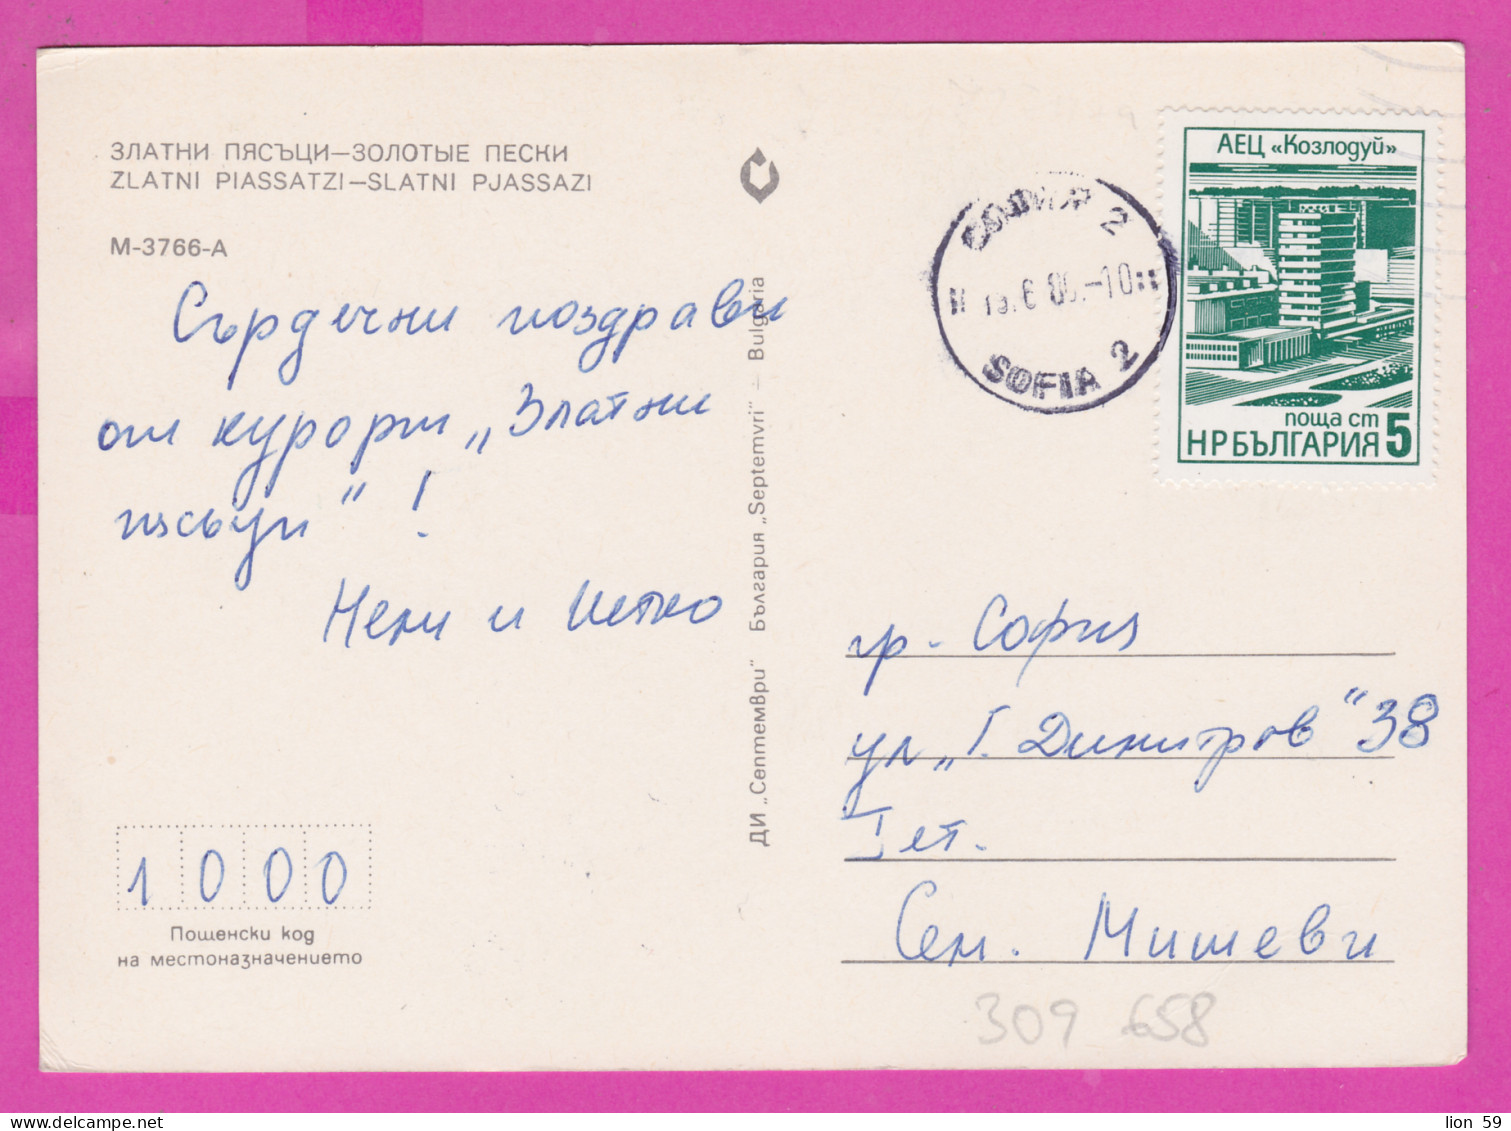 309658 / Bulgaria - Golden Sands (Varna) Night Hotels Black Sea Resort PC 1980 USED - 5 St Kozloduy Nuclear Power Plant - Storia Postale